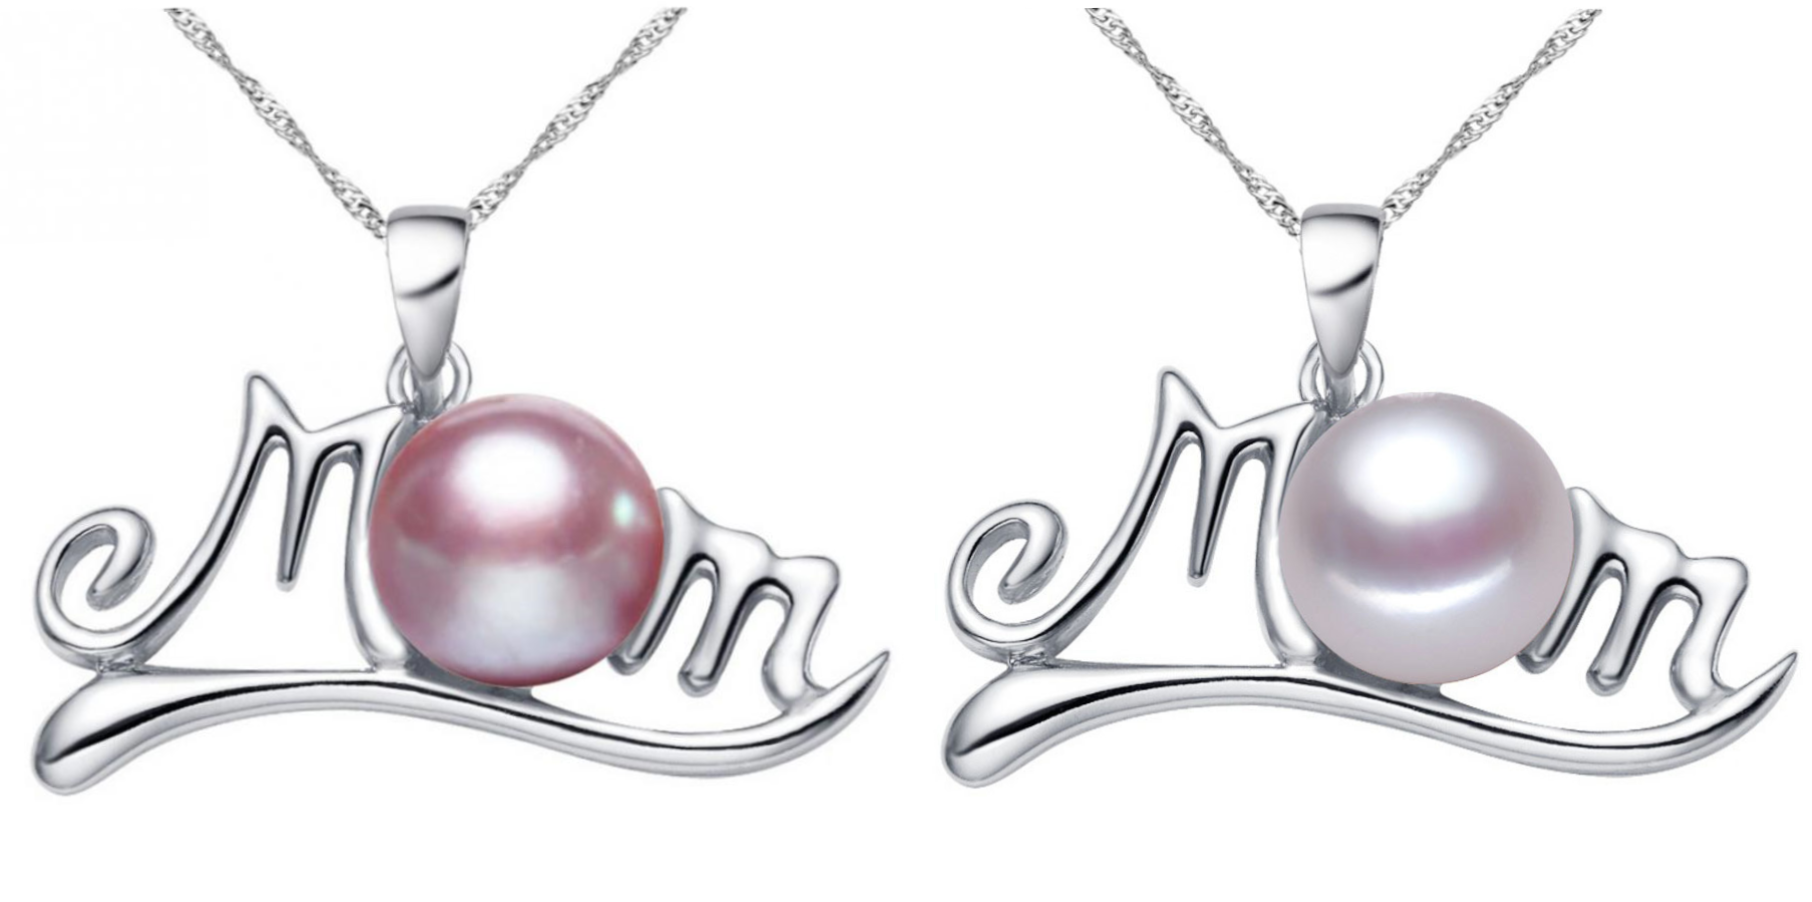 10 pcs - Mum Freshwater Pearl Pendant Necklace in Colour White and Purple– 2 Colours 5 Each|GCC073-white/purple|UK SELLER